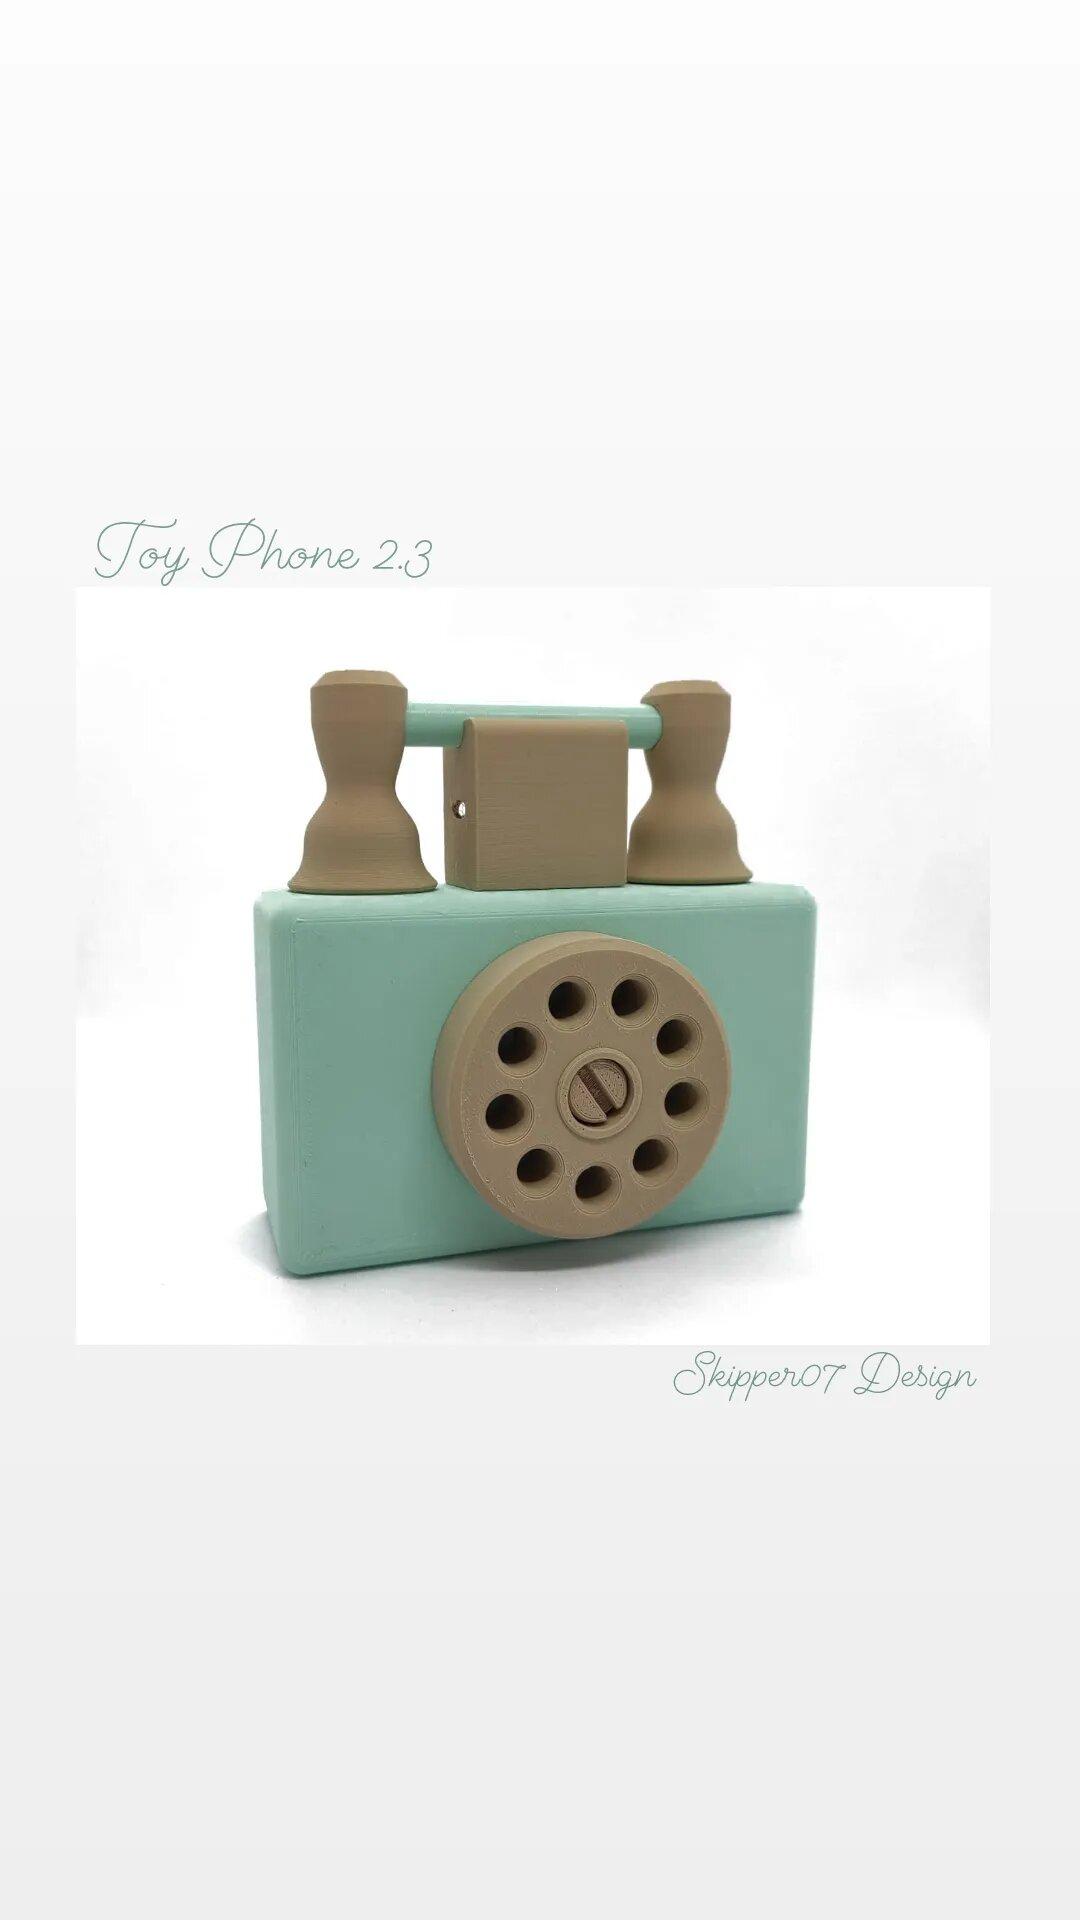 Toy Phone 2.3 3d model